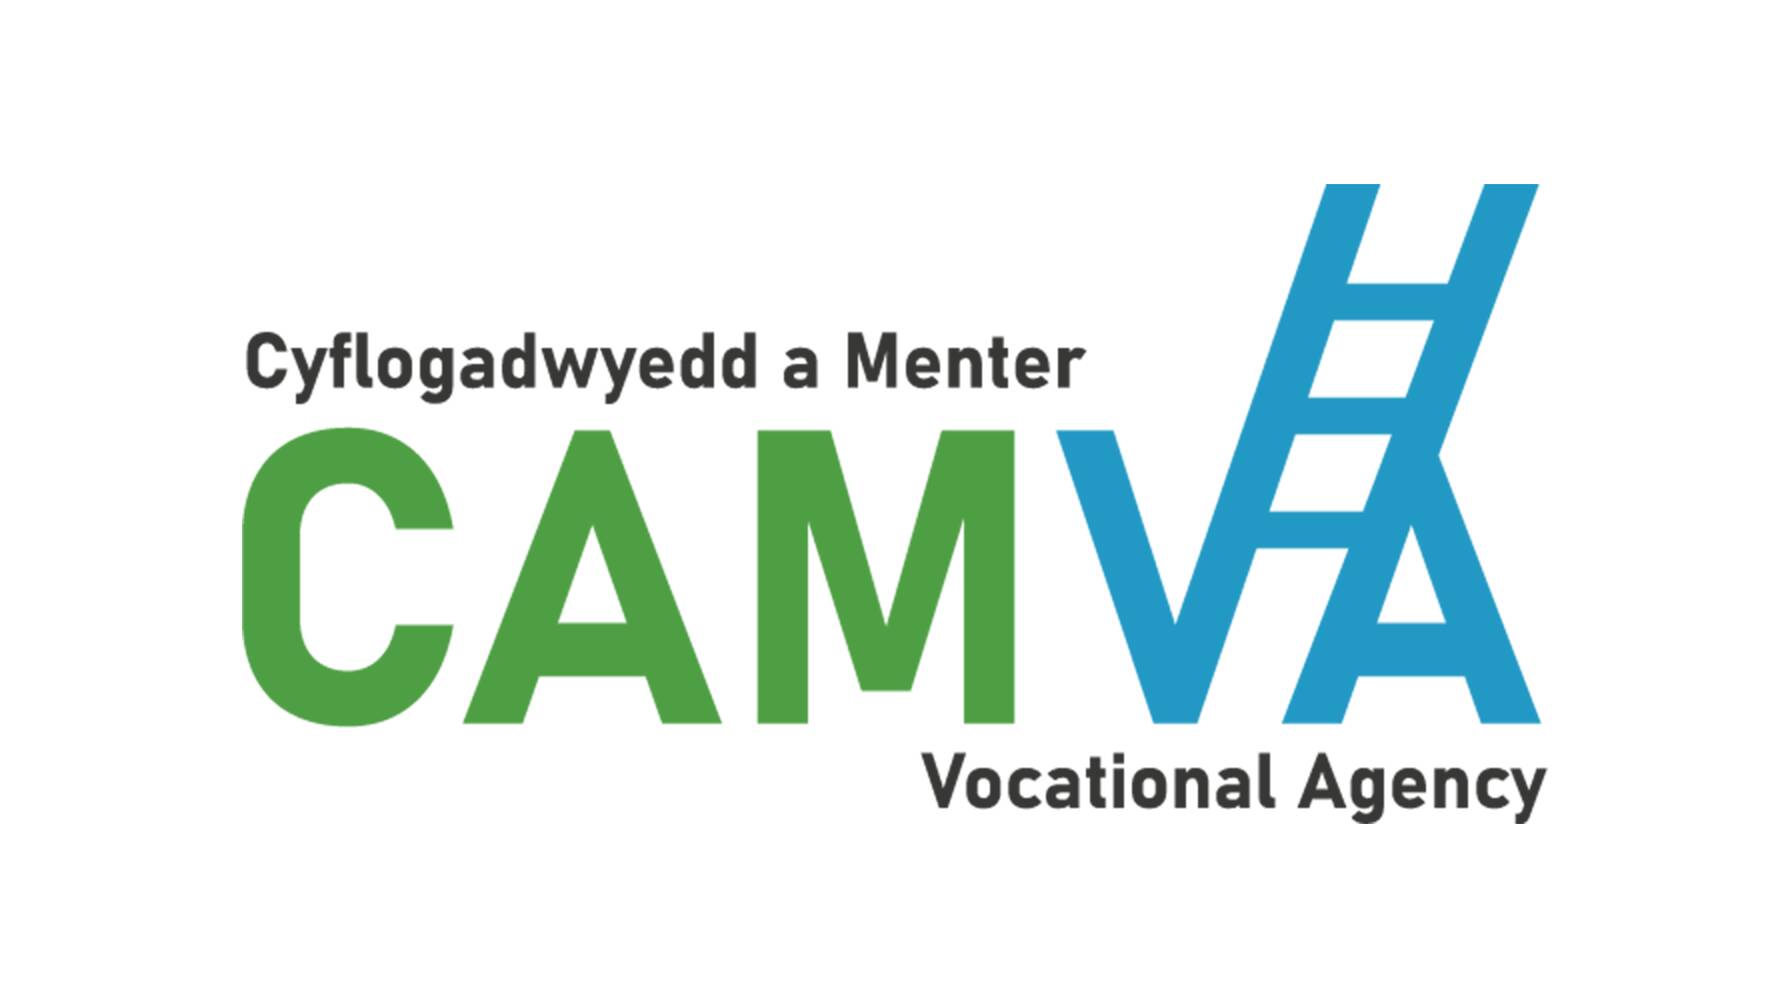 CAMVA logo